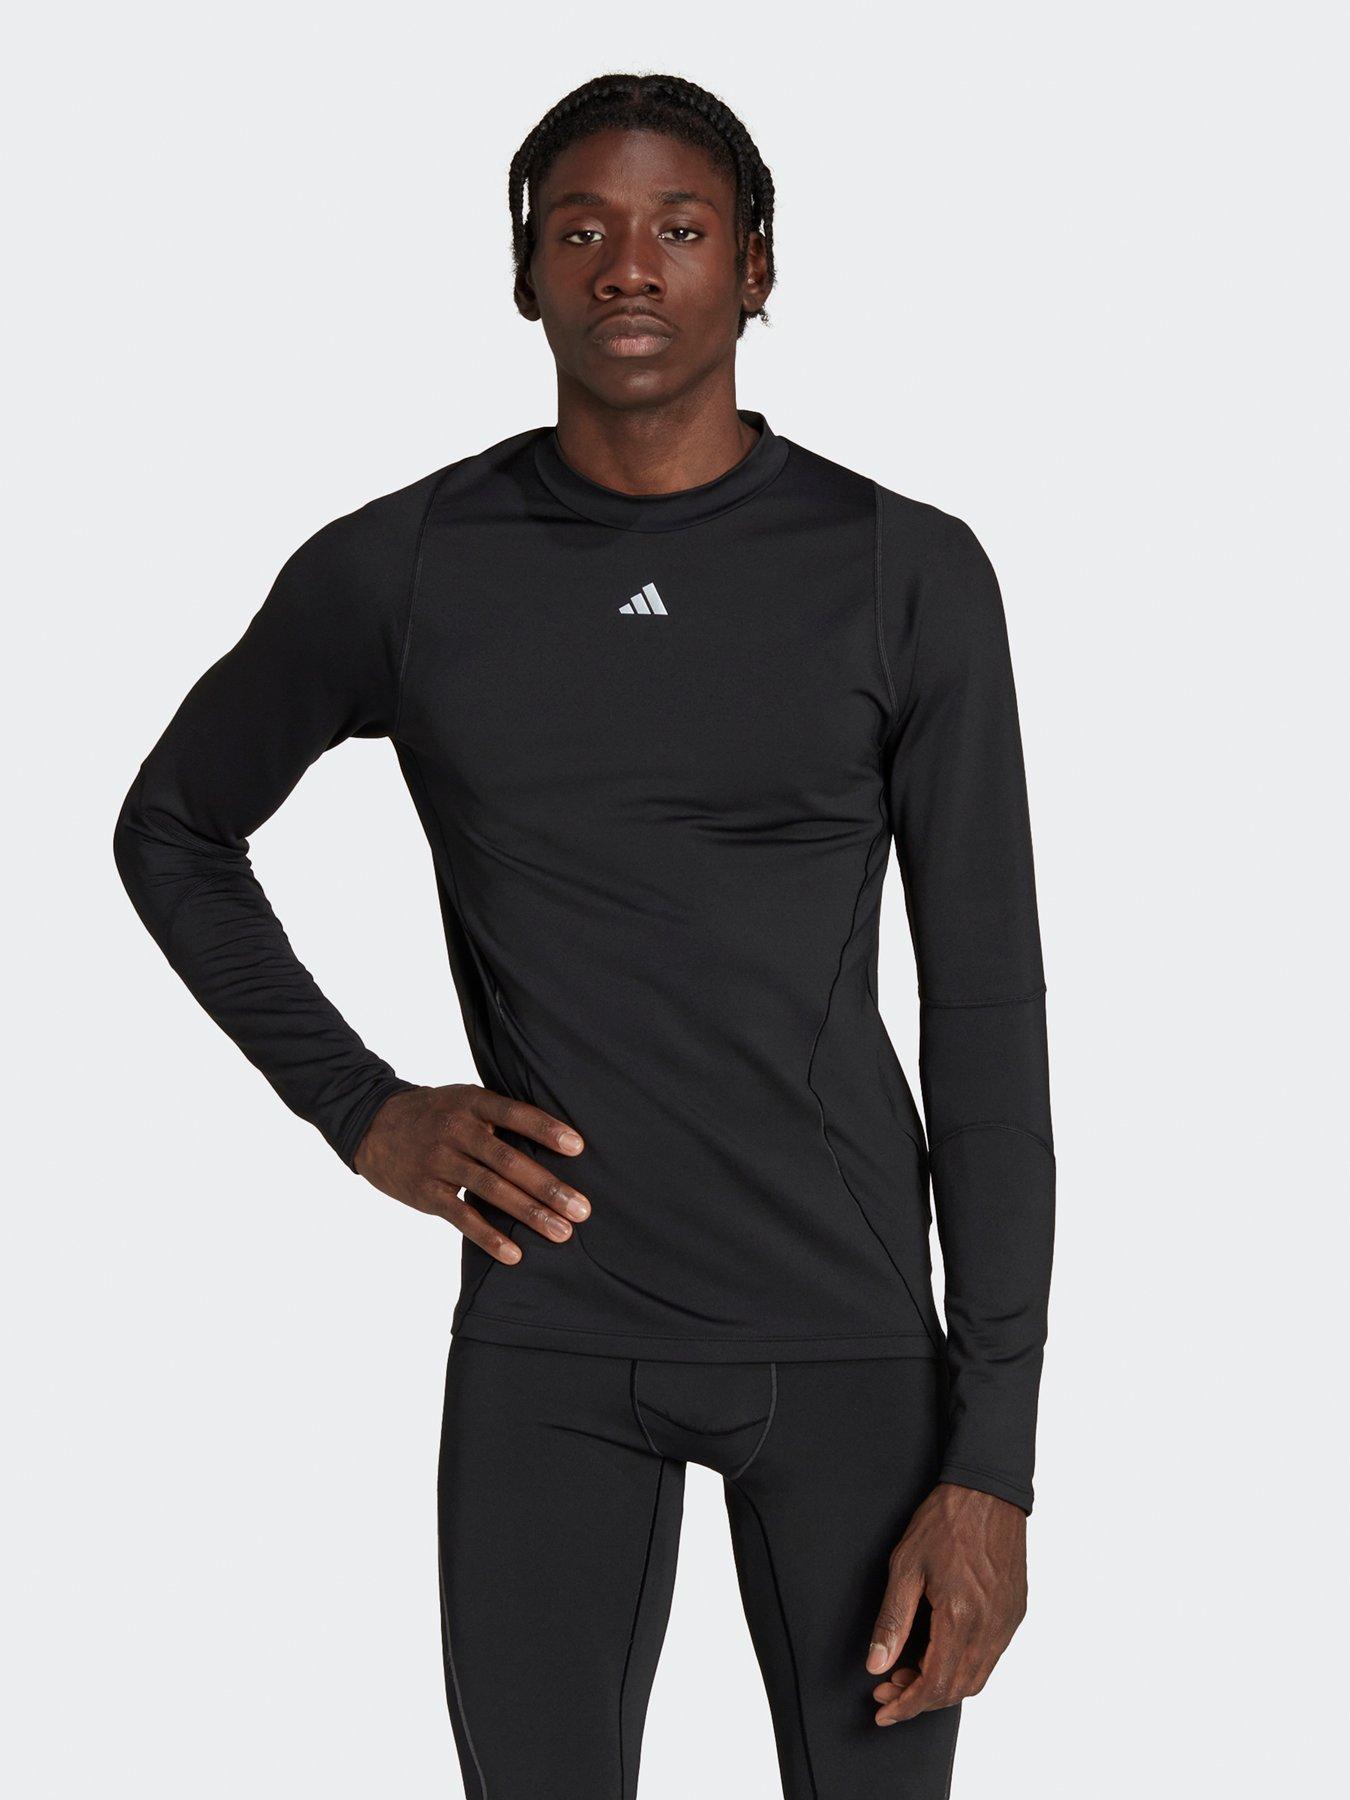  HDE Mens Athletic Performance Shirt Long Sleeve Black